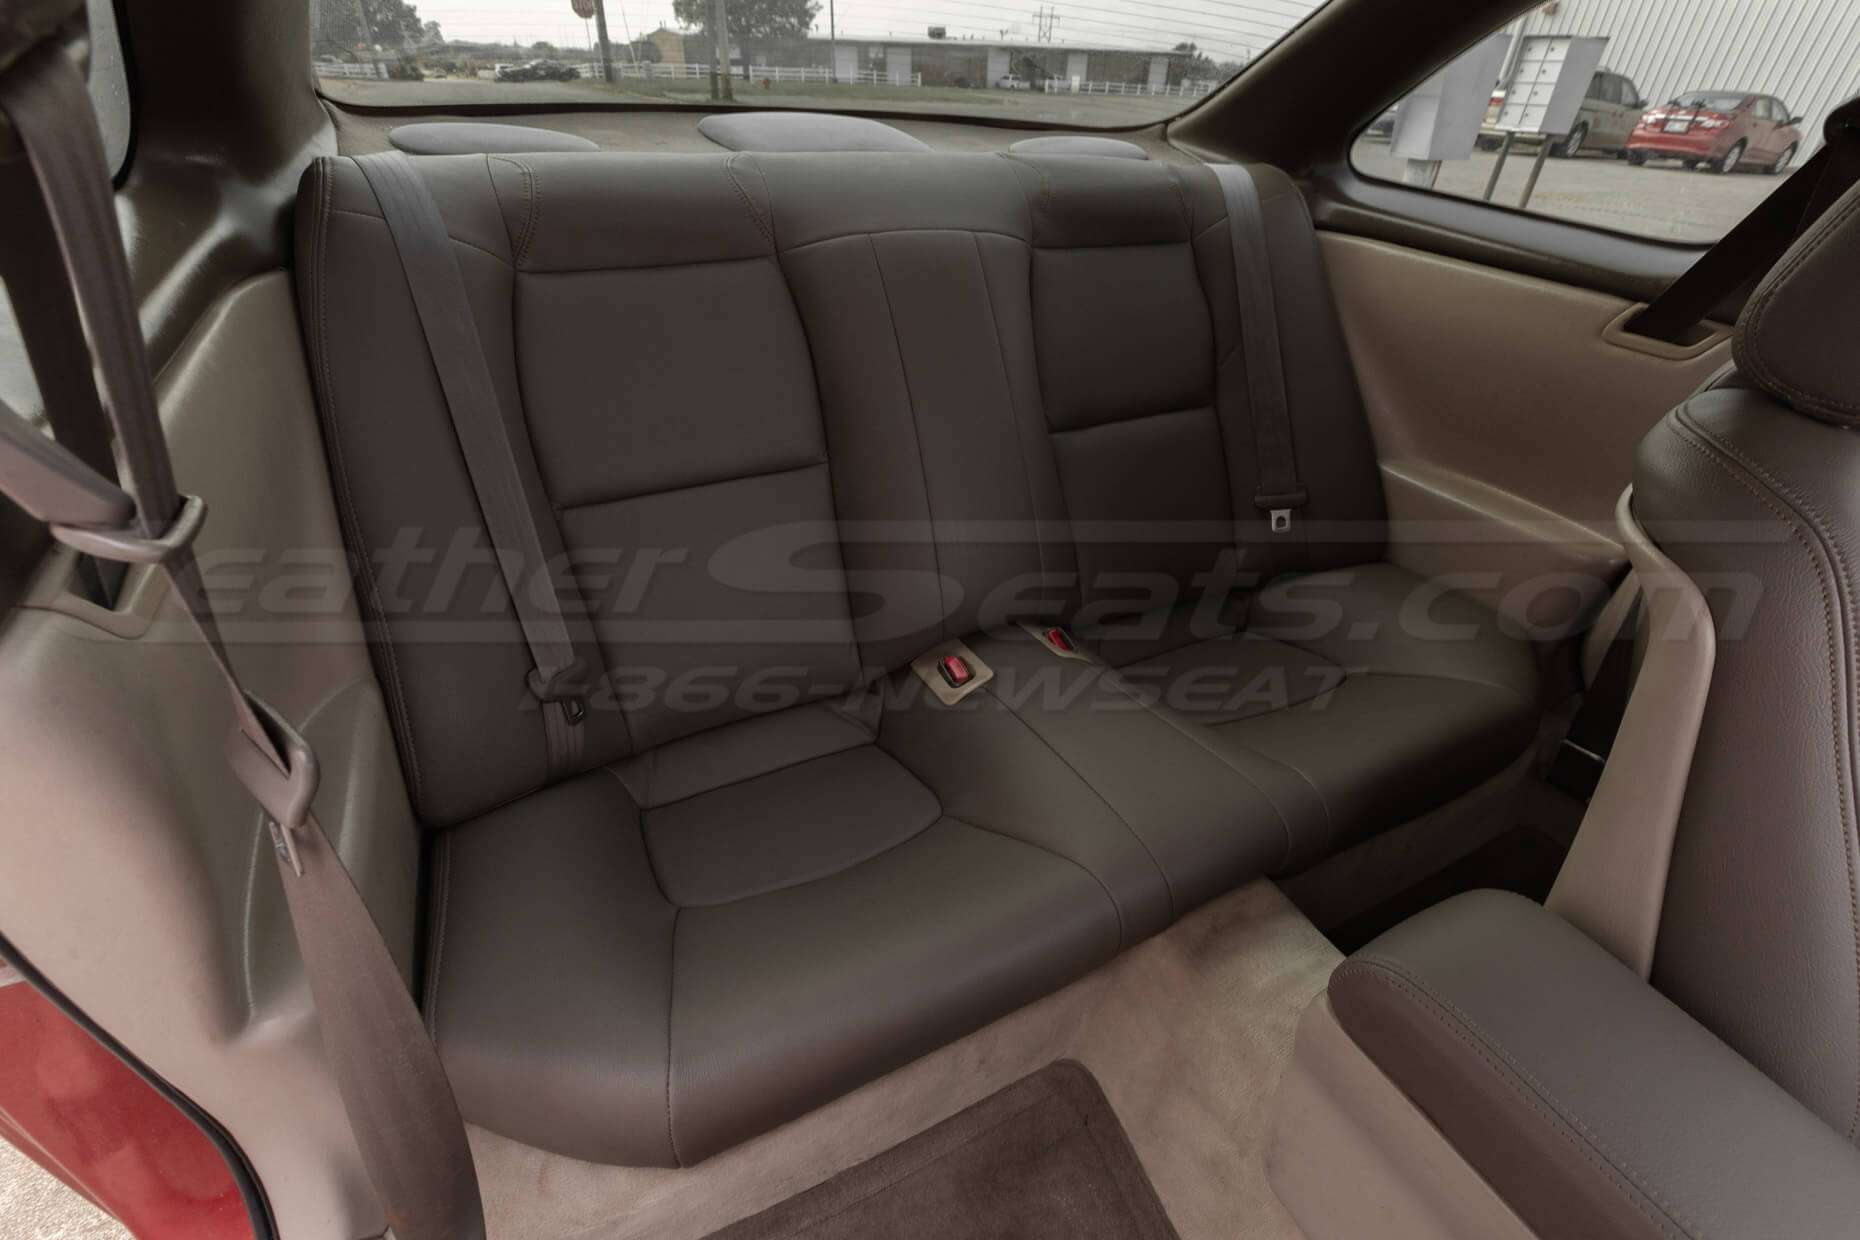 Lexus SC300/400 Lather Seats - Driftwood - Rear seats from passenger side